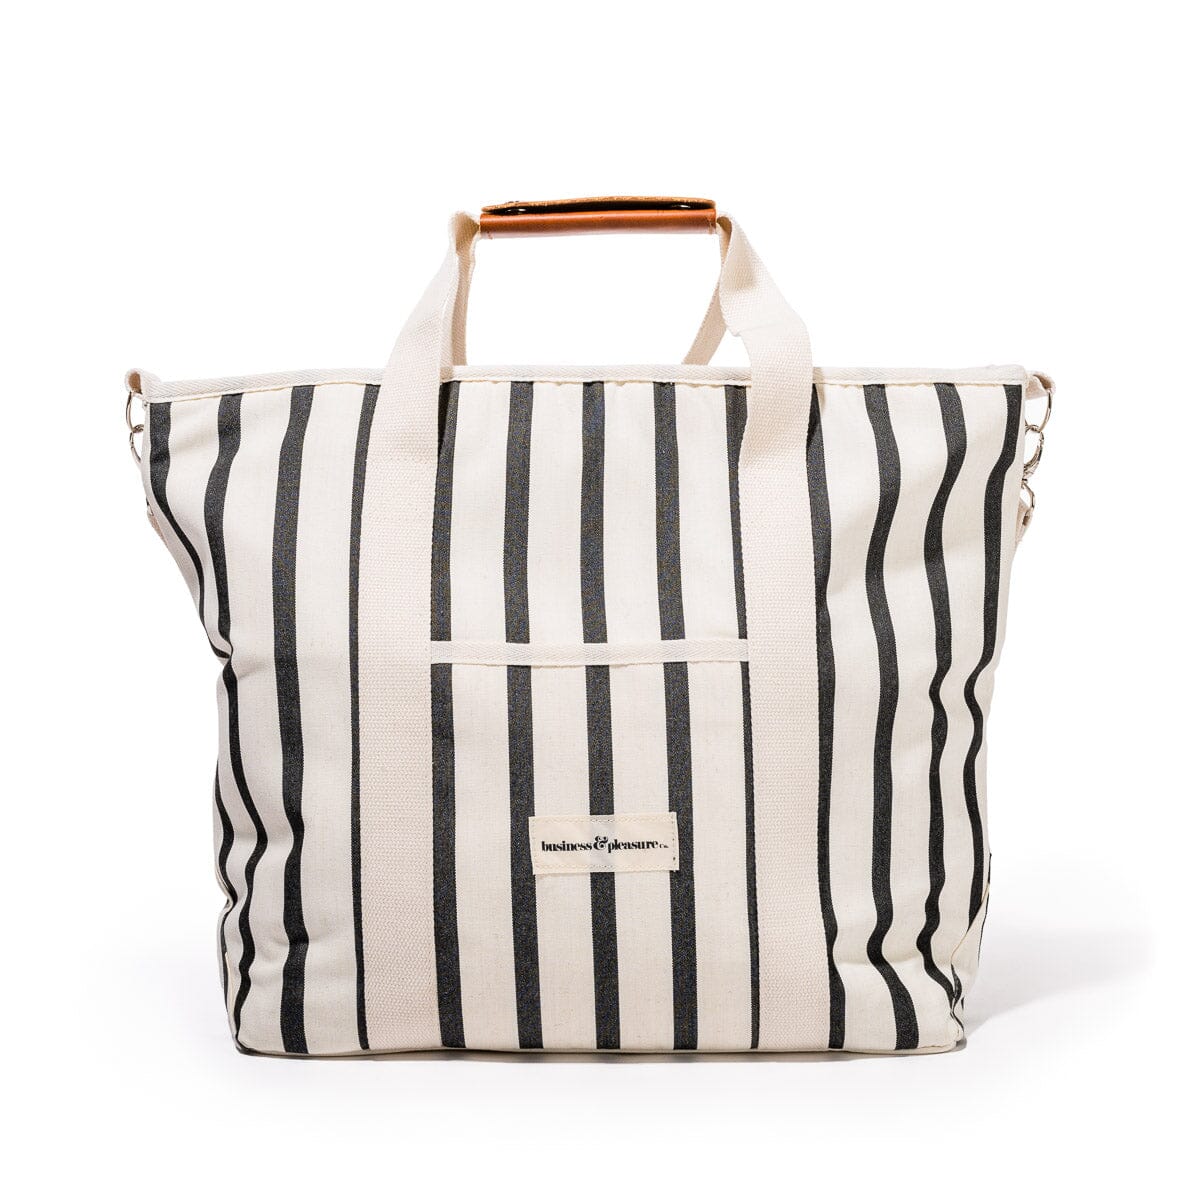 The Cooler Tote Bag - Monaco Black Stripe Cooler Tote Business & Pleasure Co Aus 